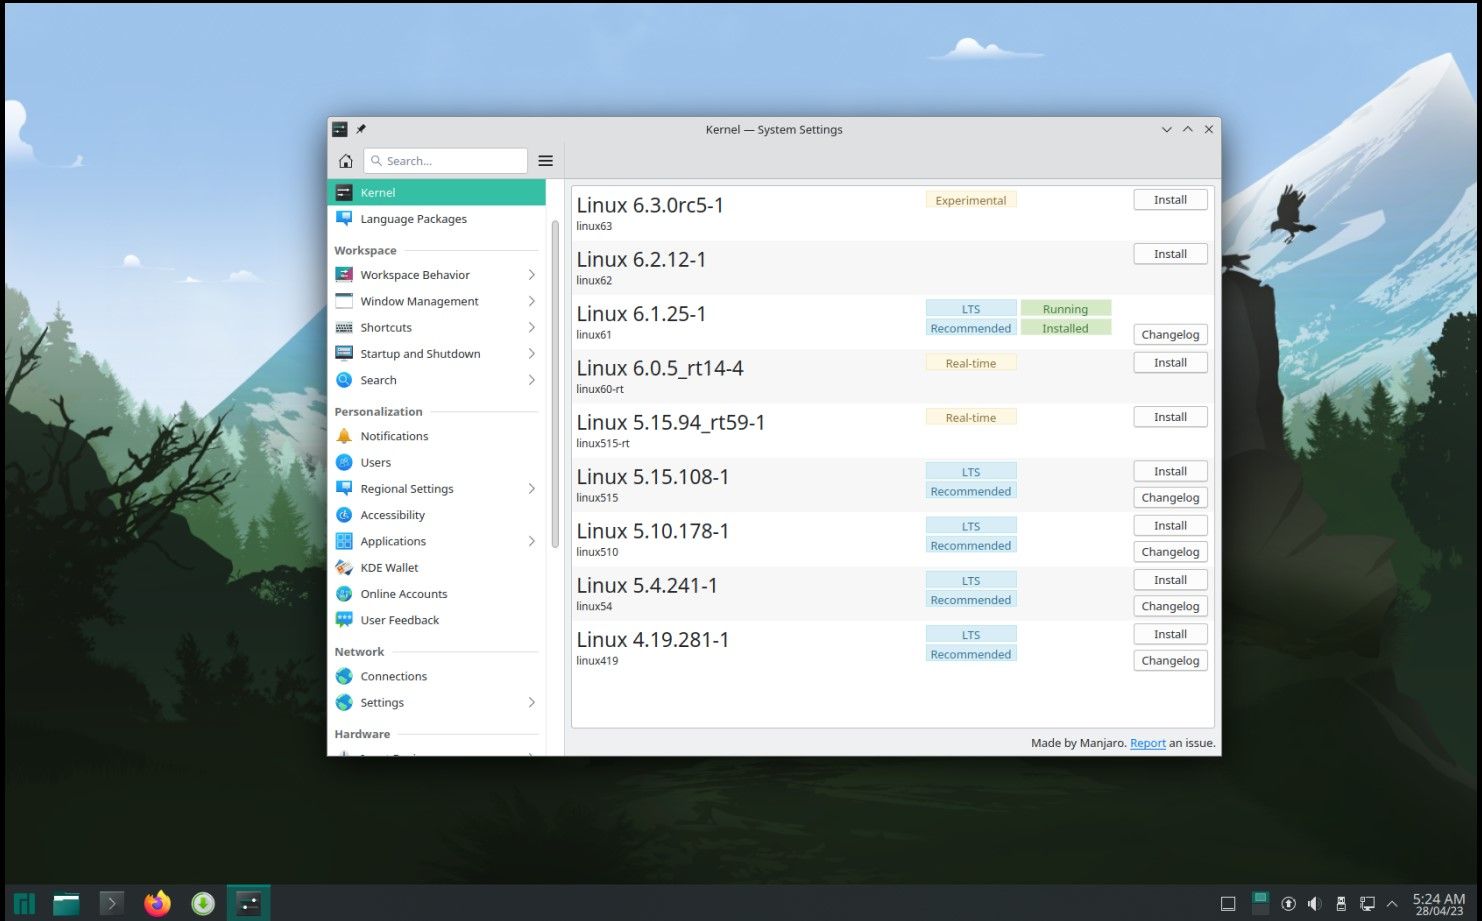 Settings window to change kernel on KDE Plasma 